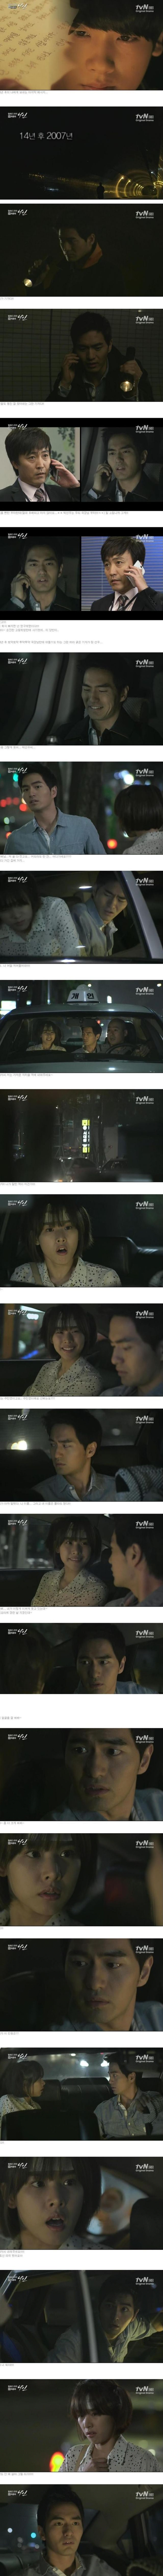 episode 20 captures for the Korean drama 'Nine: Time Travelling Nine Times'